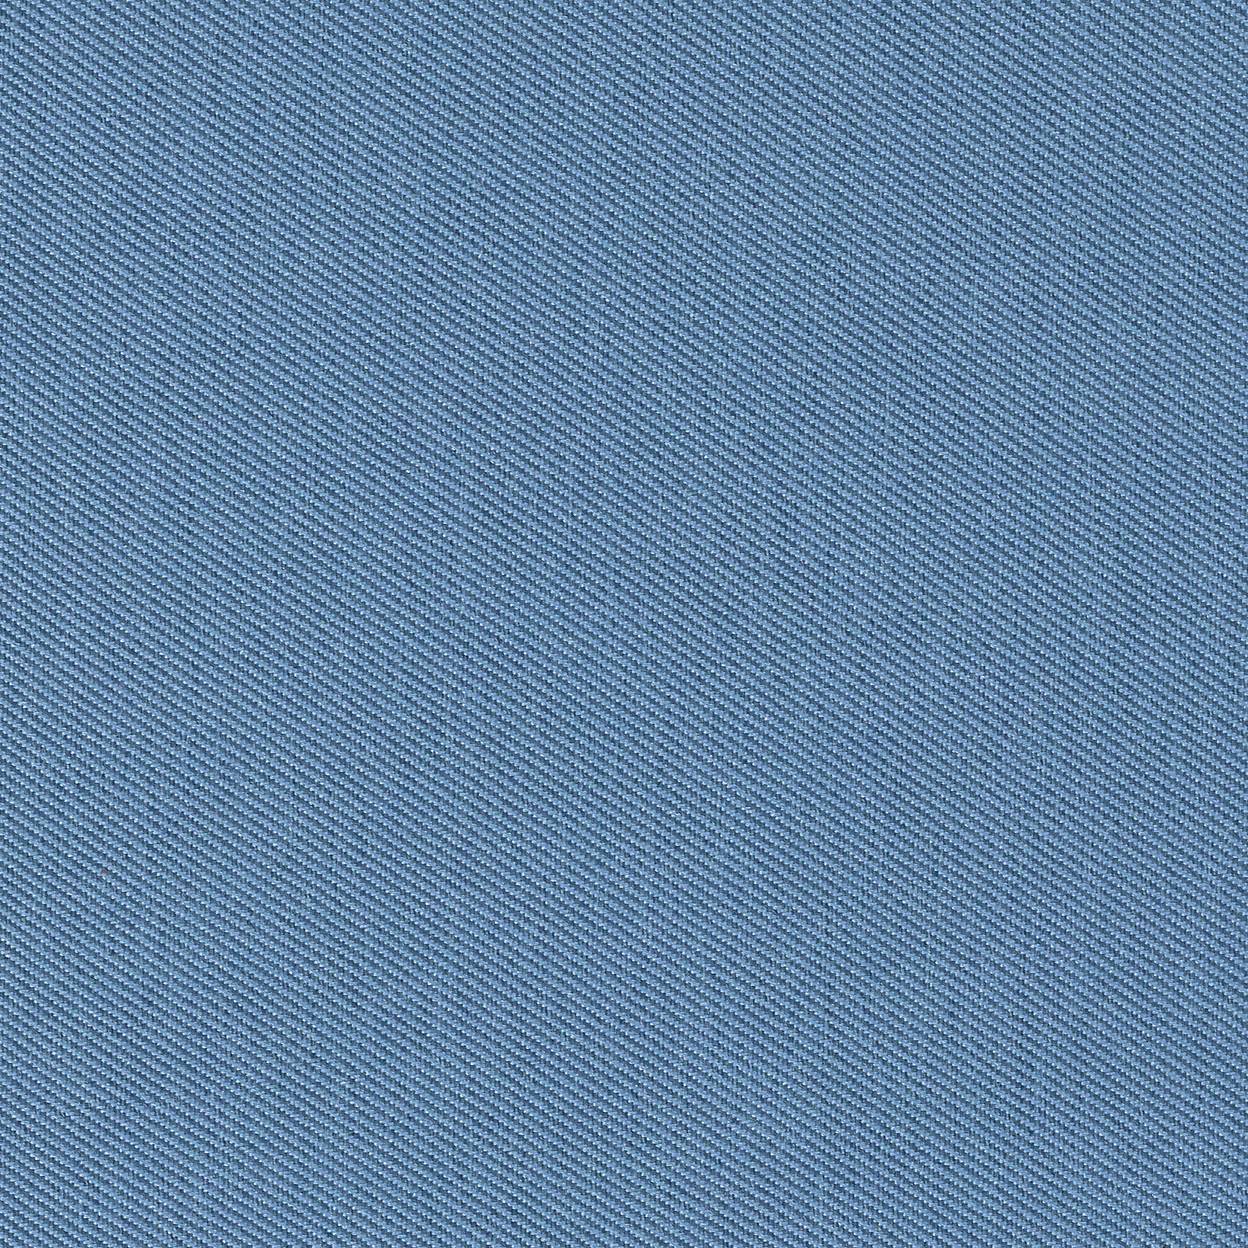 Neptune - Slant - Textiles - Materials - Herman Miller